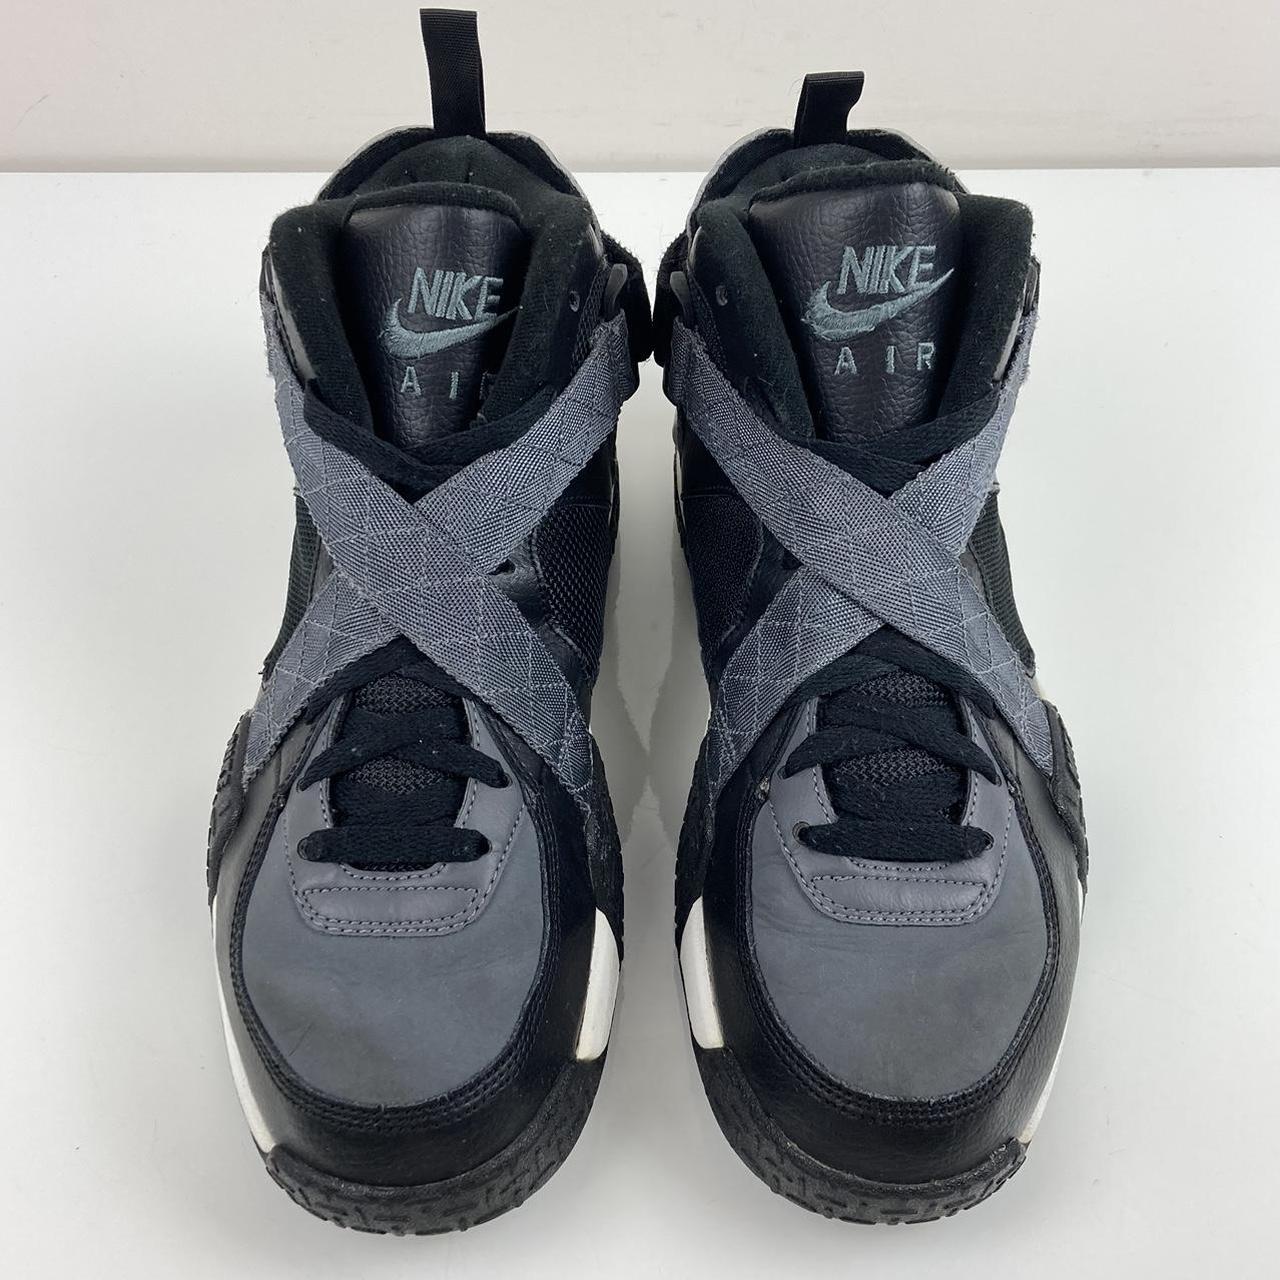 Nike Air Raid Black Grey